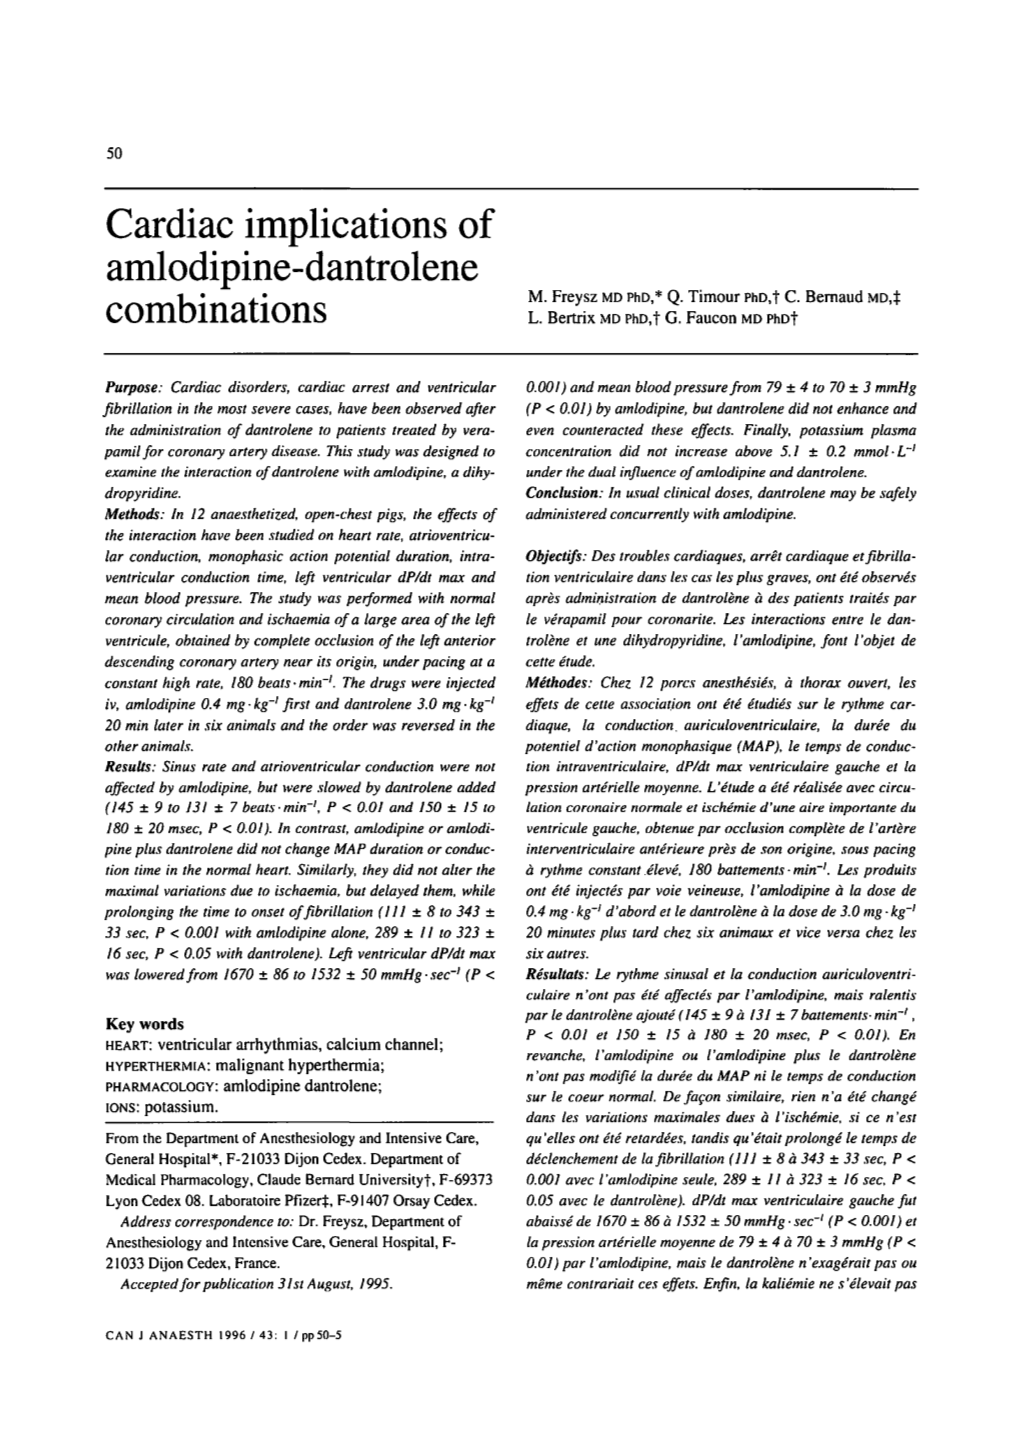 Cardiac Implications of Amlodipine-Dantrolene Combinations